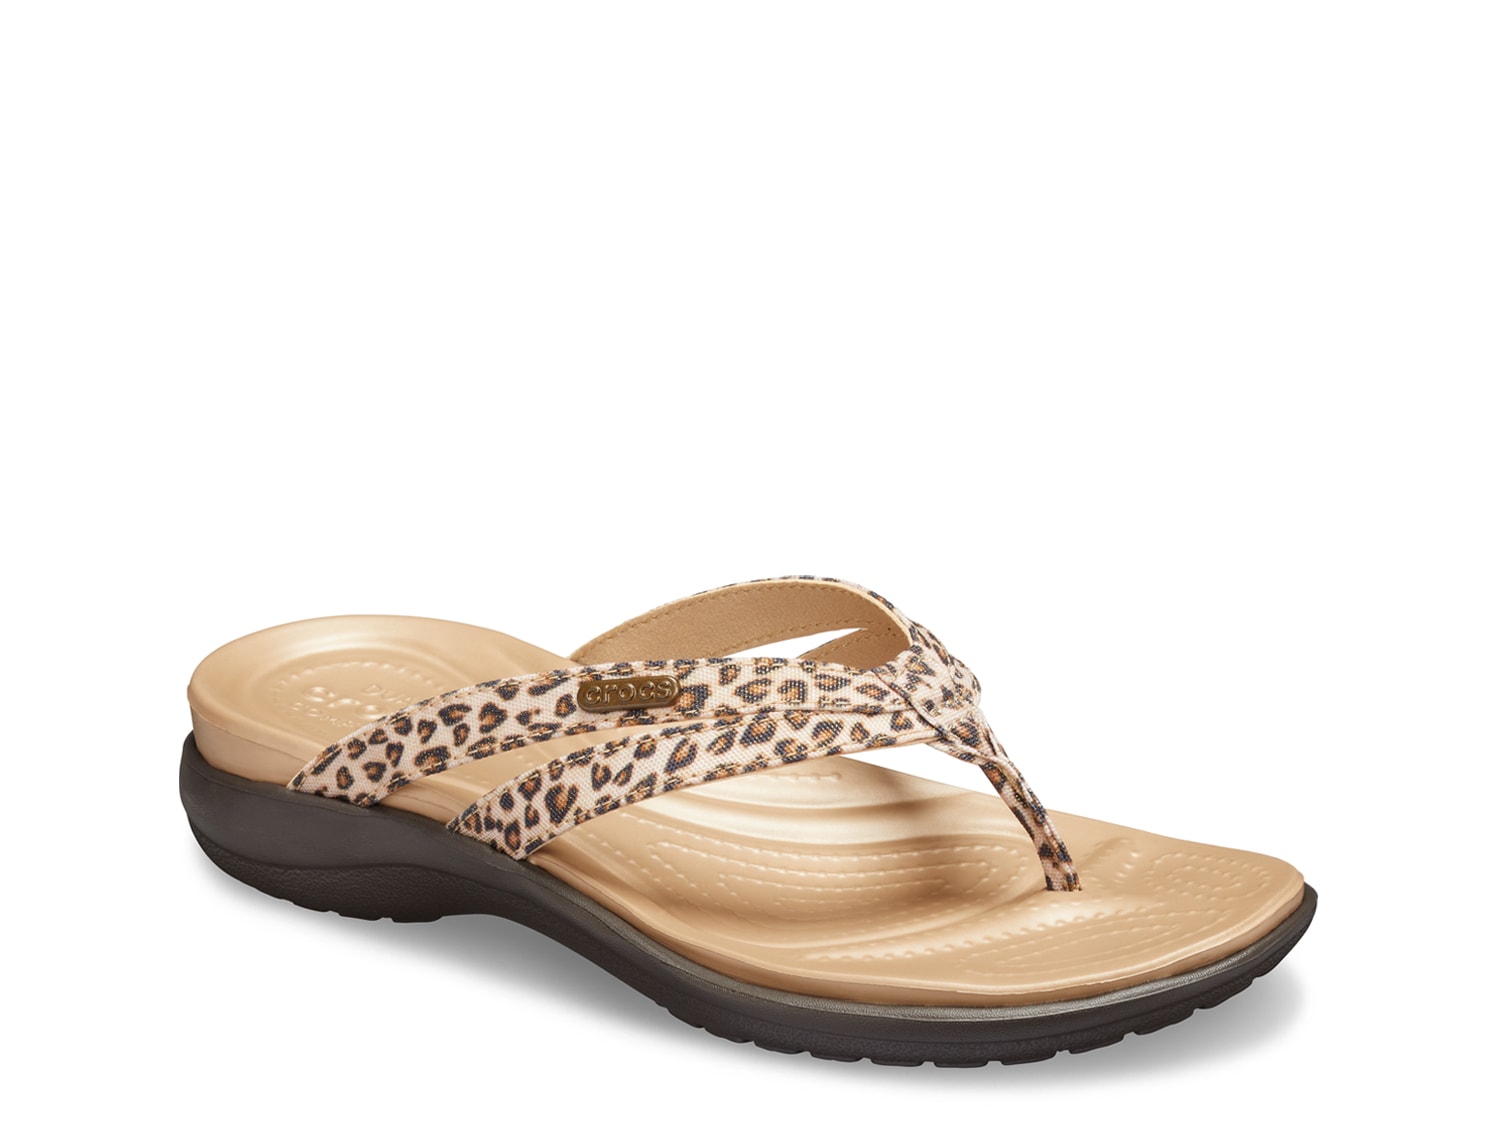 crocs capri basic wedge sandal